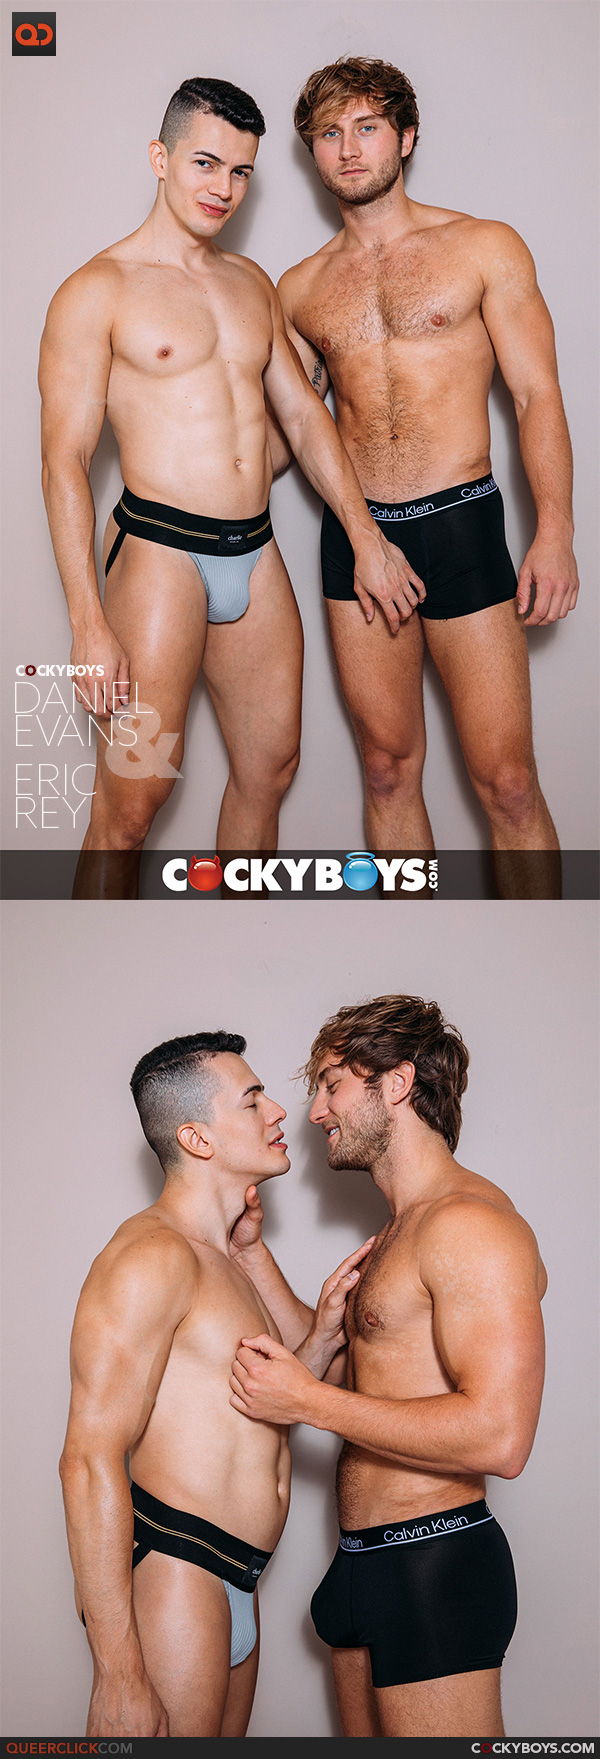 CockyBoys: Daniel Evans and Eric Rey